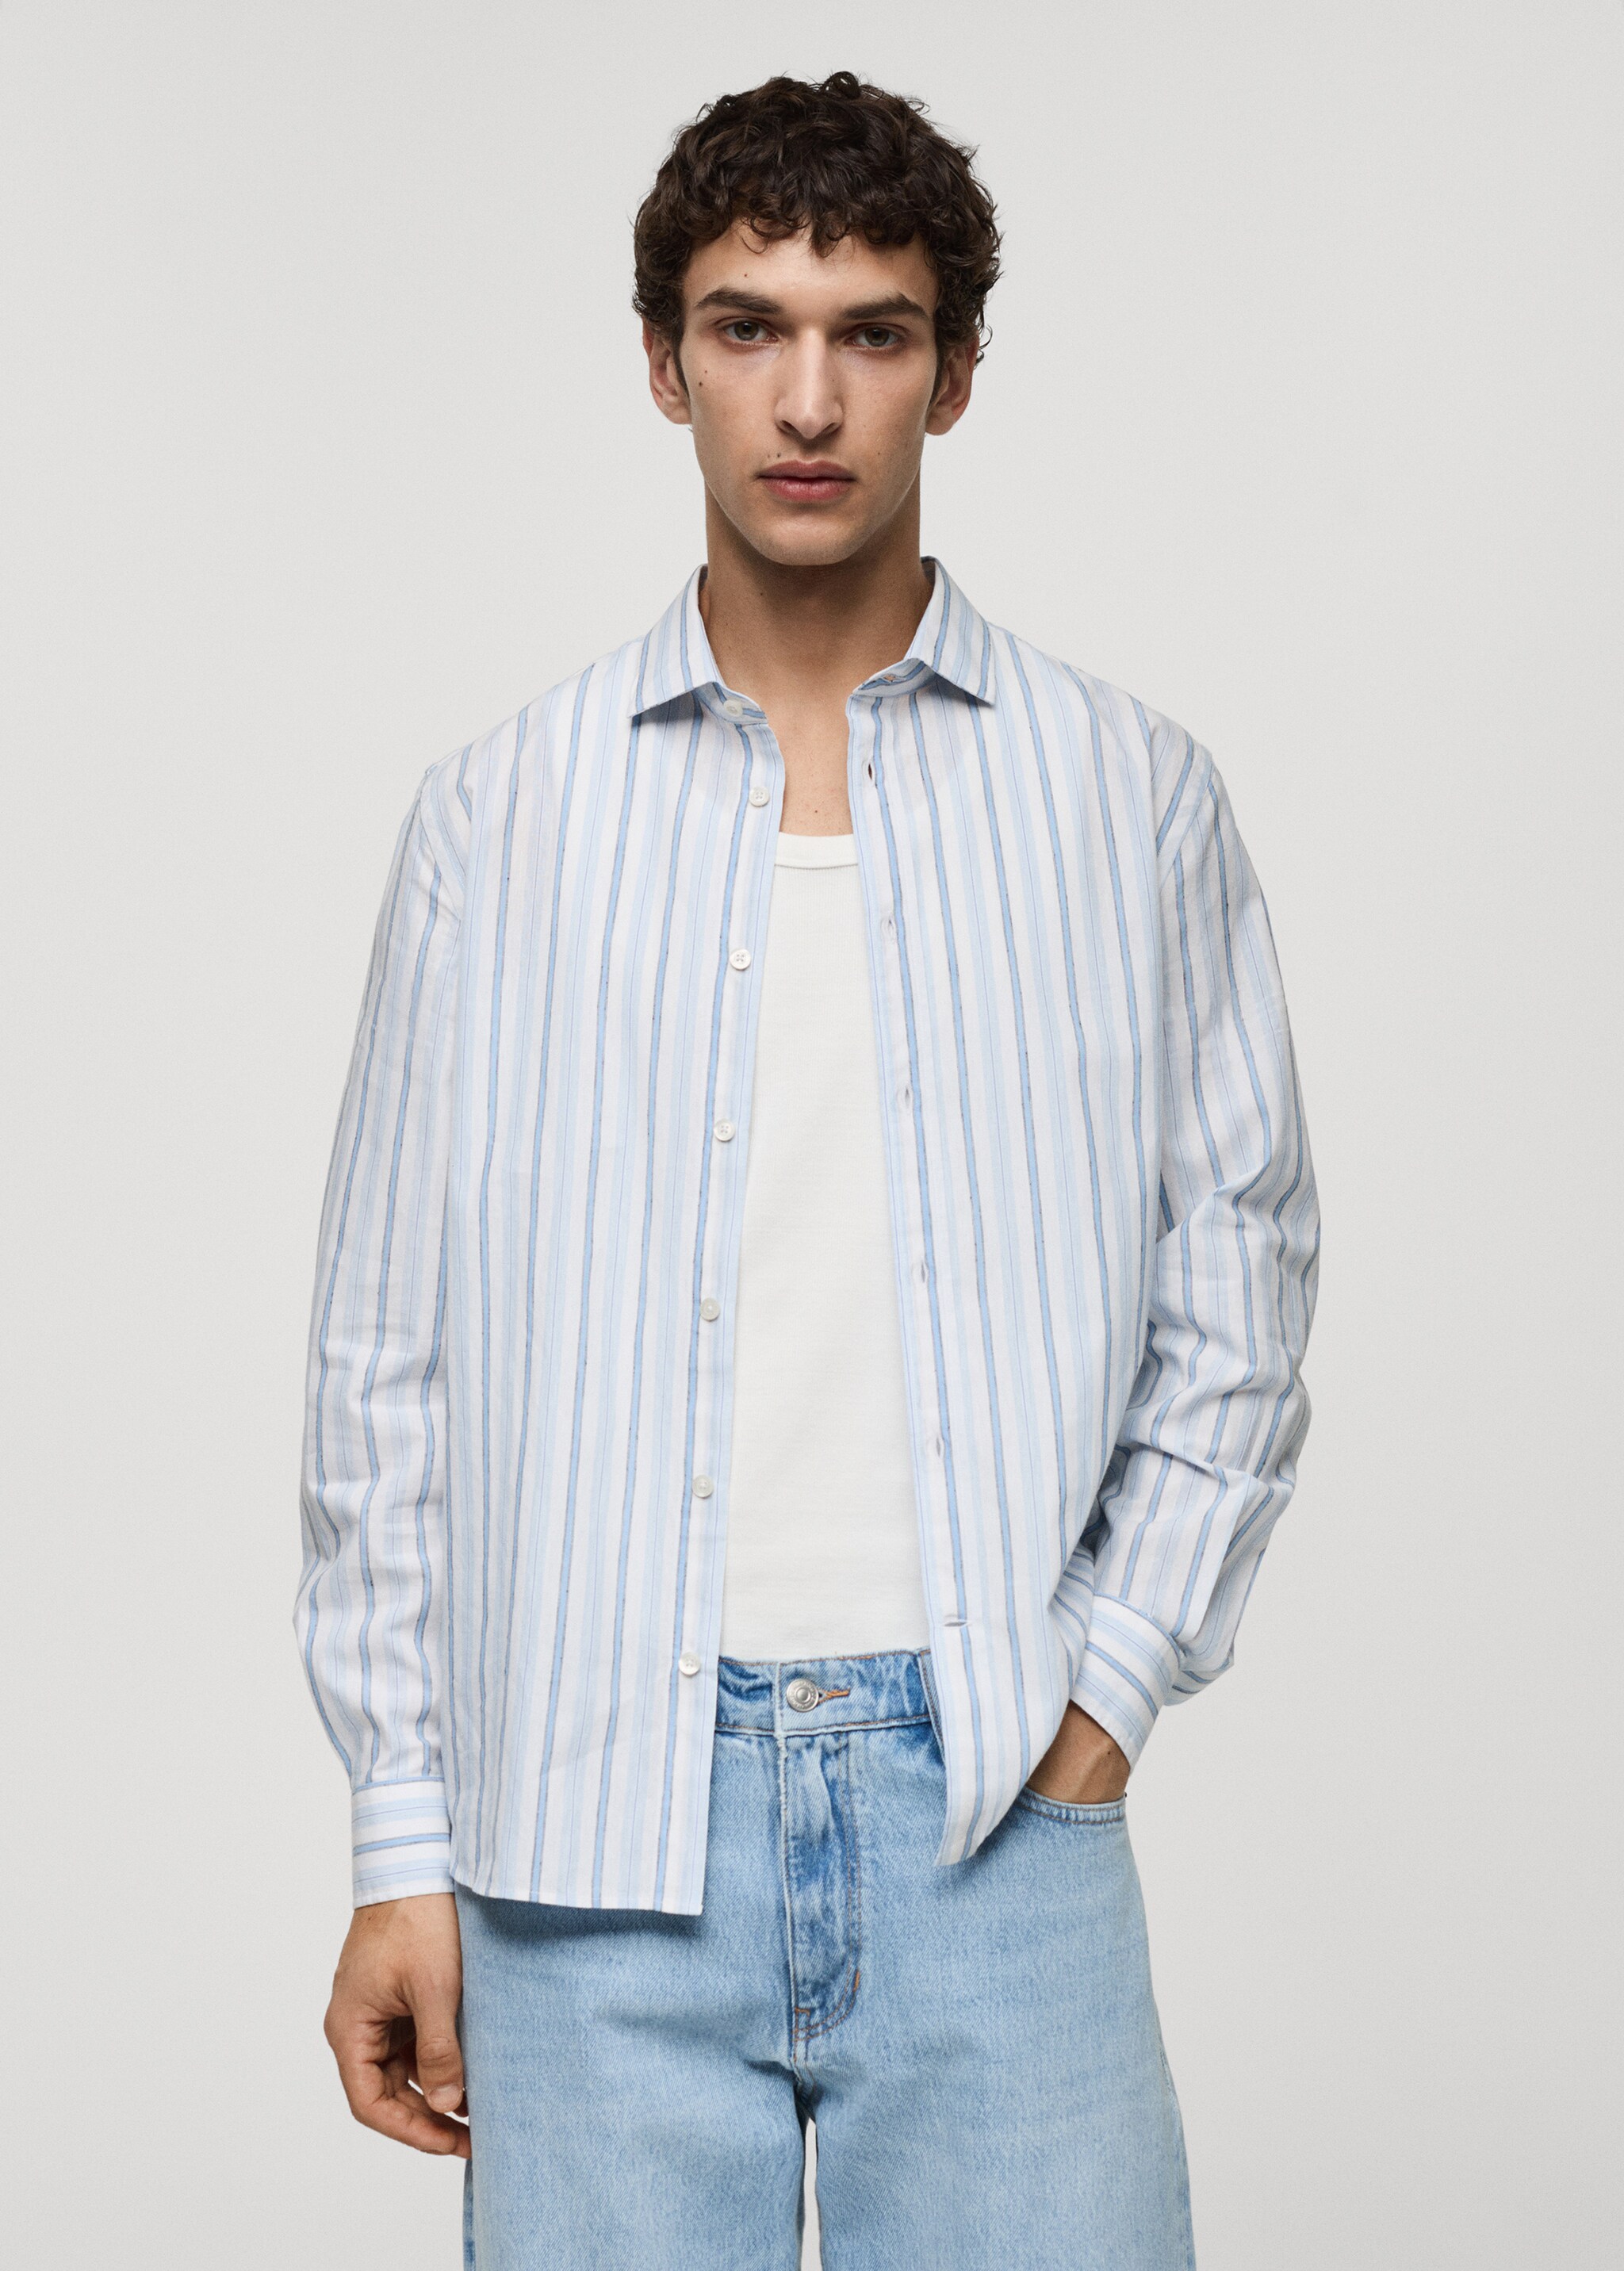 Camisa classic fit algodón lino rayas rústico - Plano medio